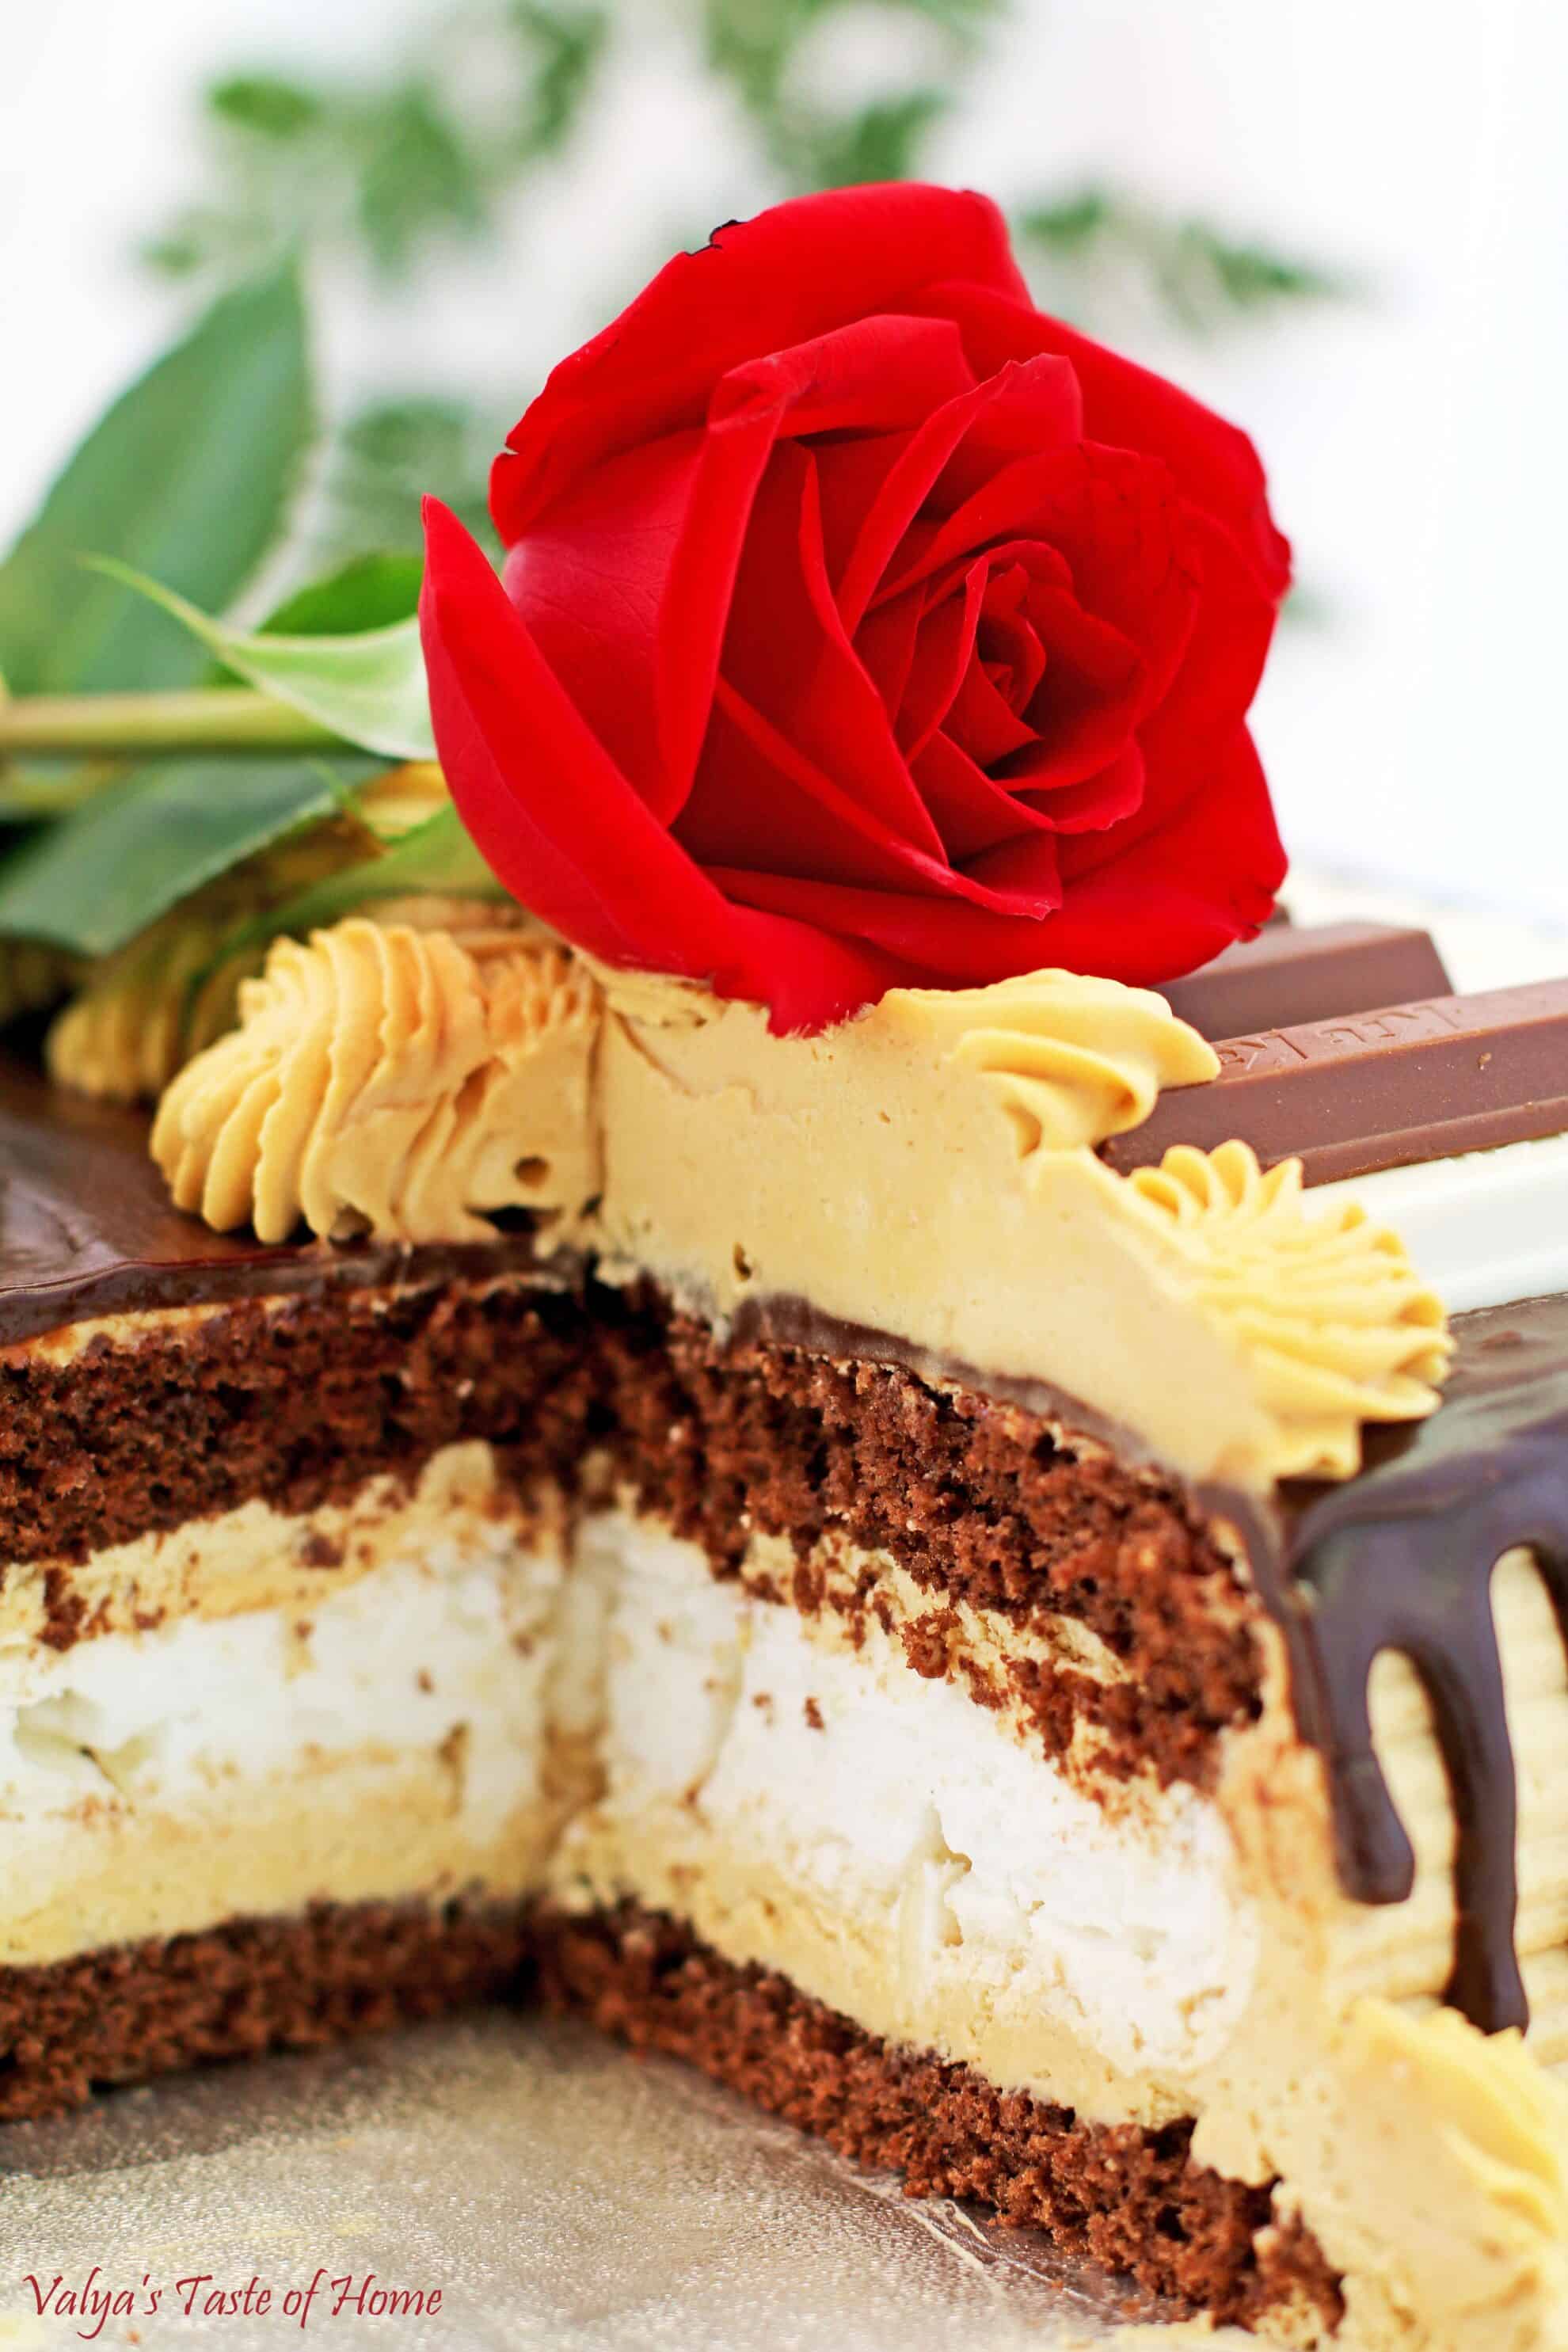 Chocolate Meringue Cake Recipe (Piano Version)